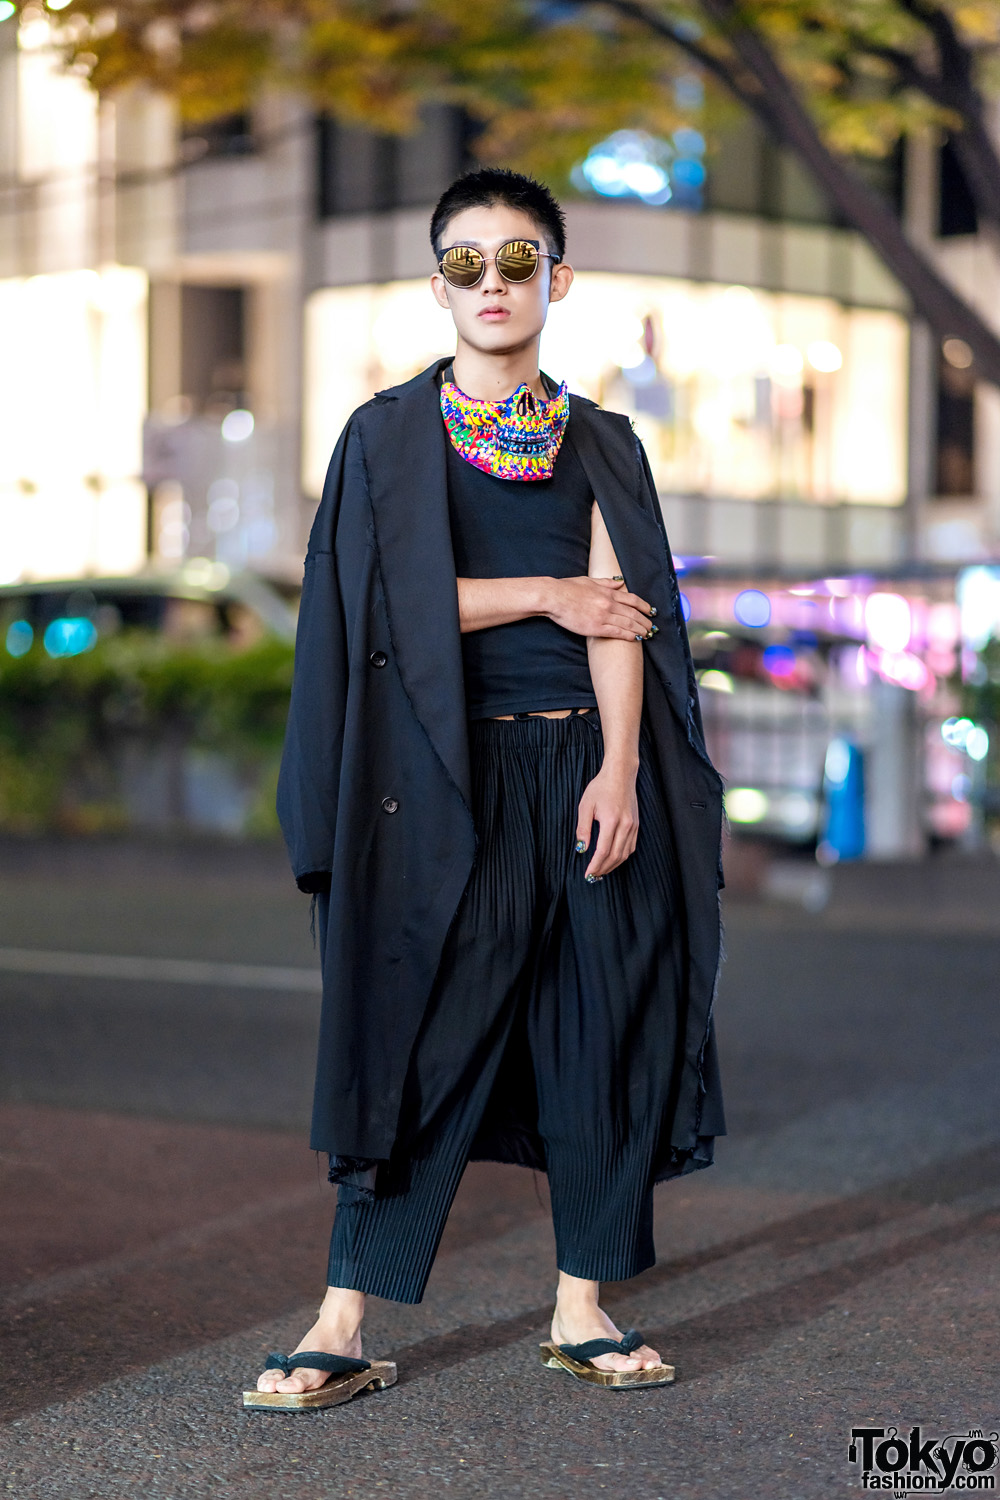 Tokyo Monochrome Street Style w/ Colorful Mask, Geta Sandals, Maiko Nail Art, Sulvam, Issey Miyake & Vintage Fashion